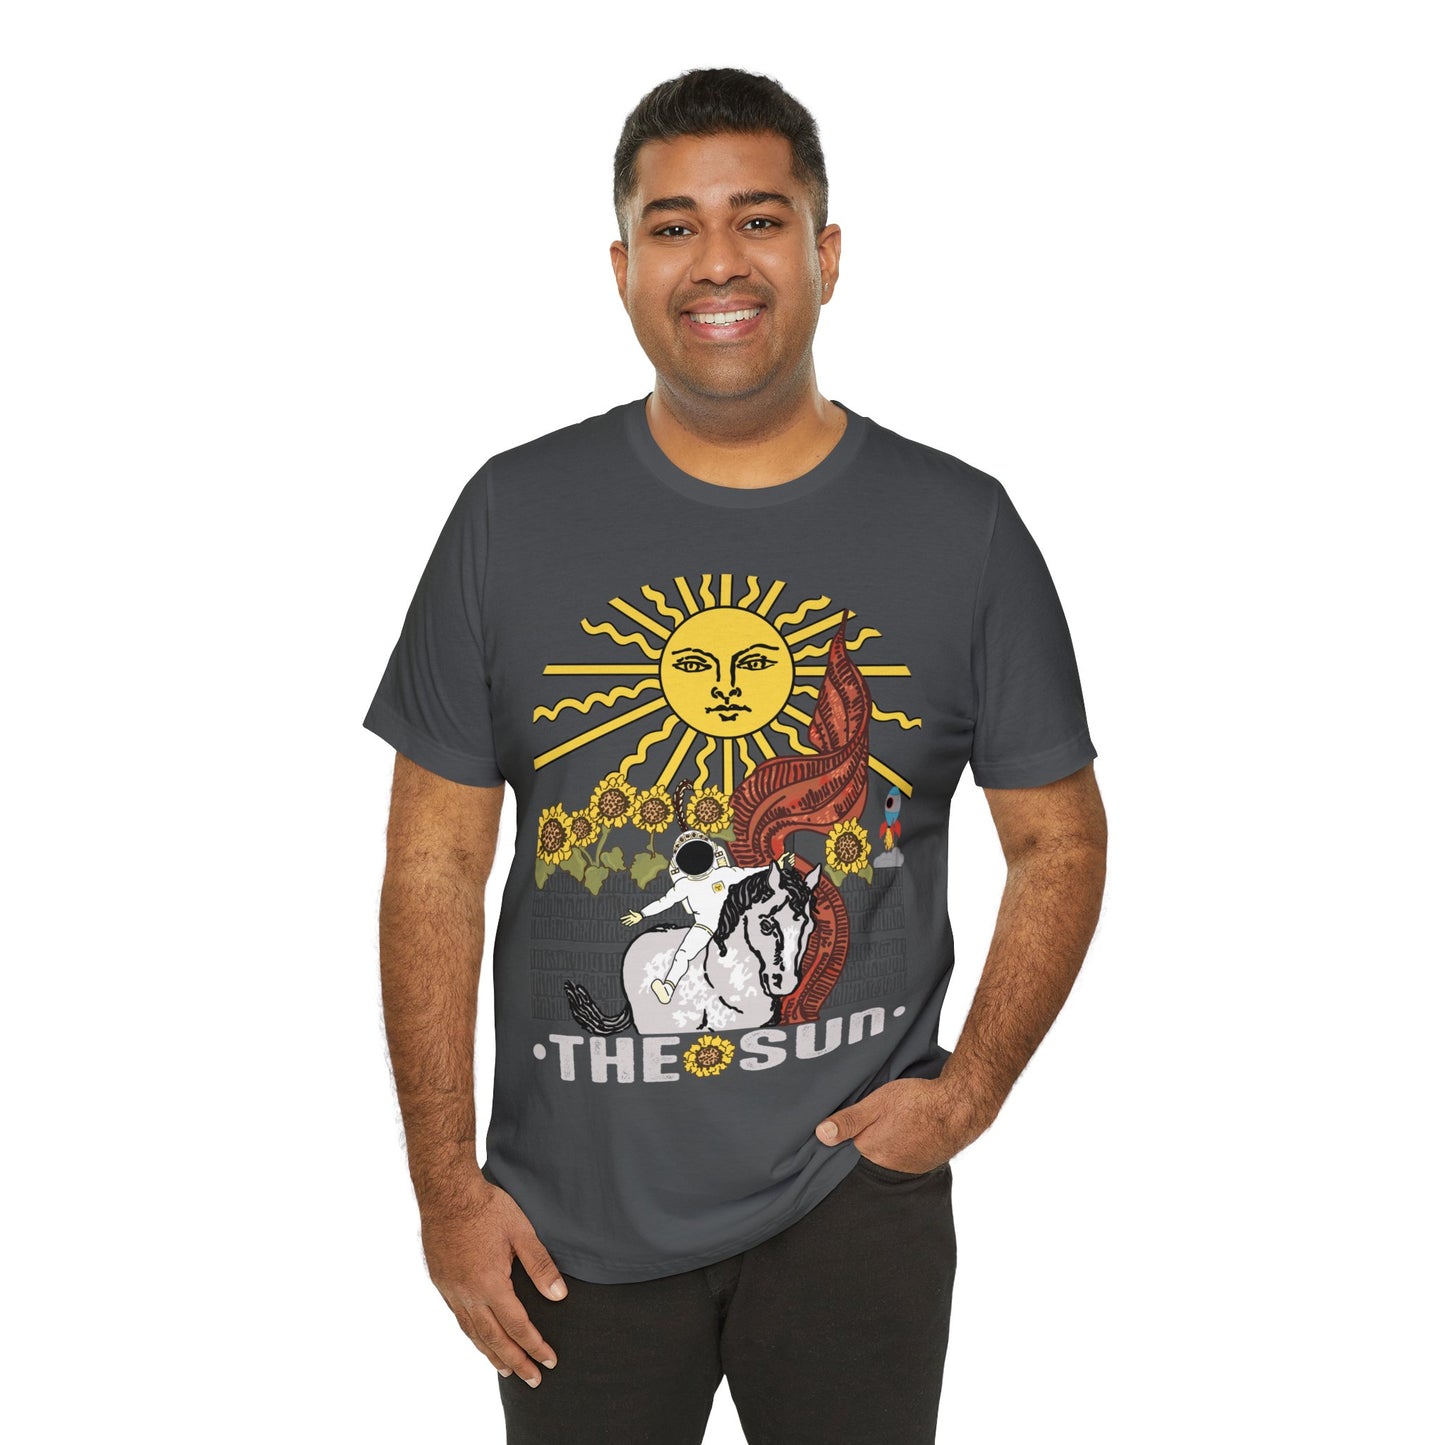 The Sun - Astronaut T- Shirt